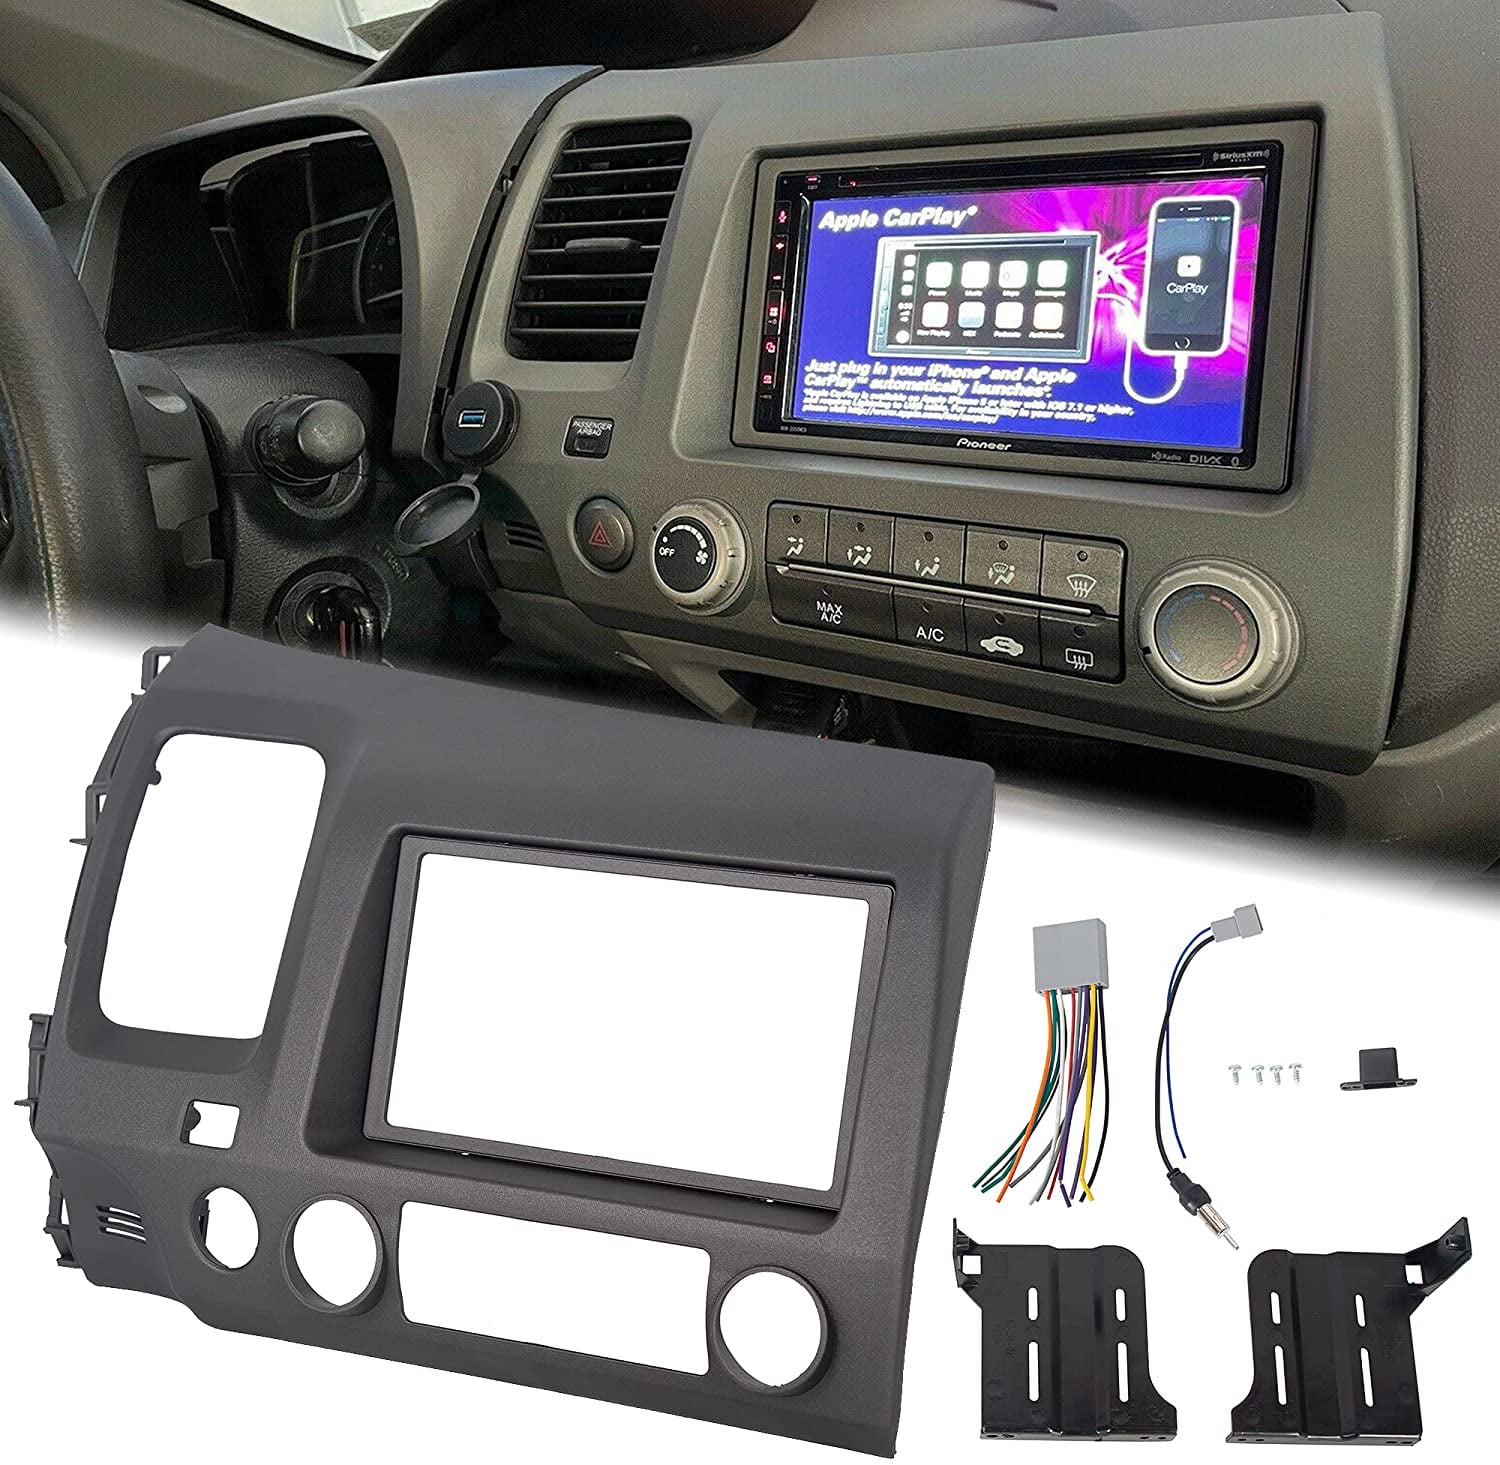 Double 2 Din Car Radio Dash Kit Wiring Harness CD Box For Honda Civic 2006-2011